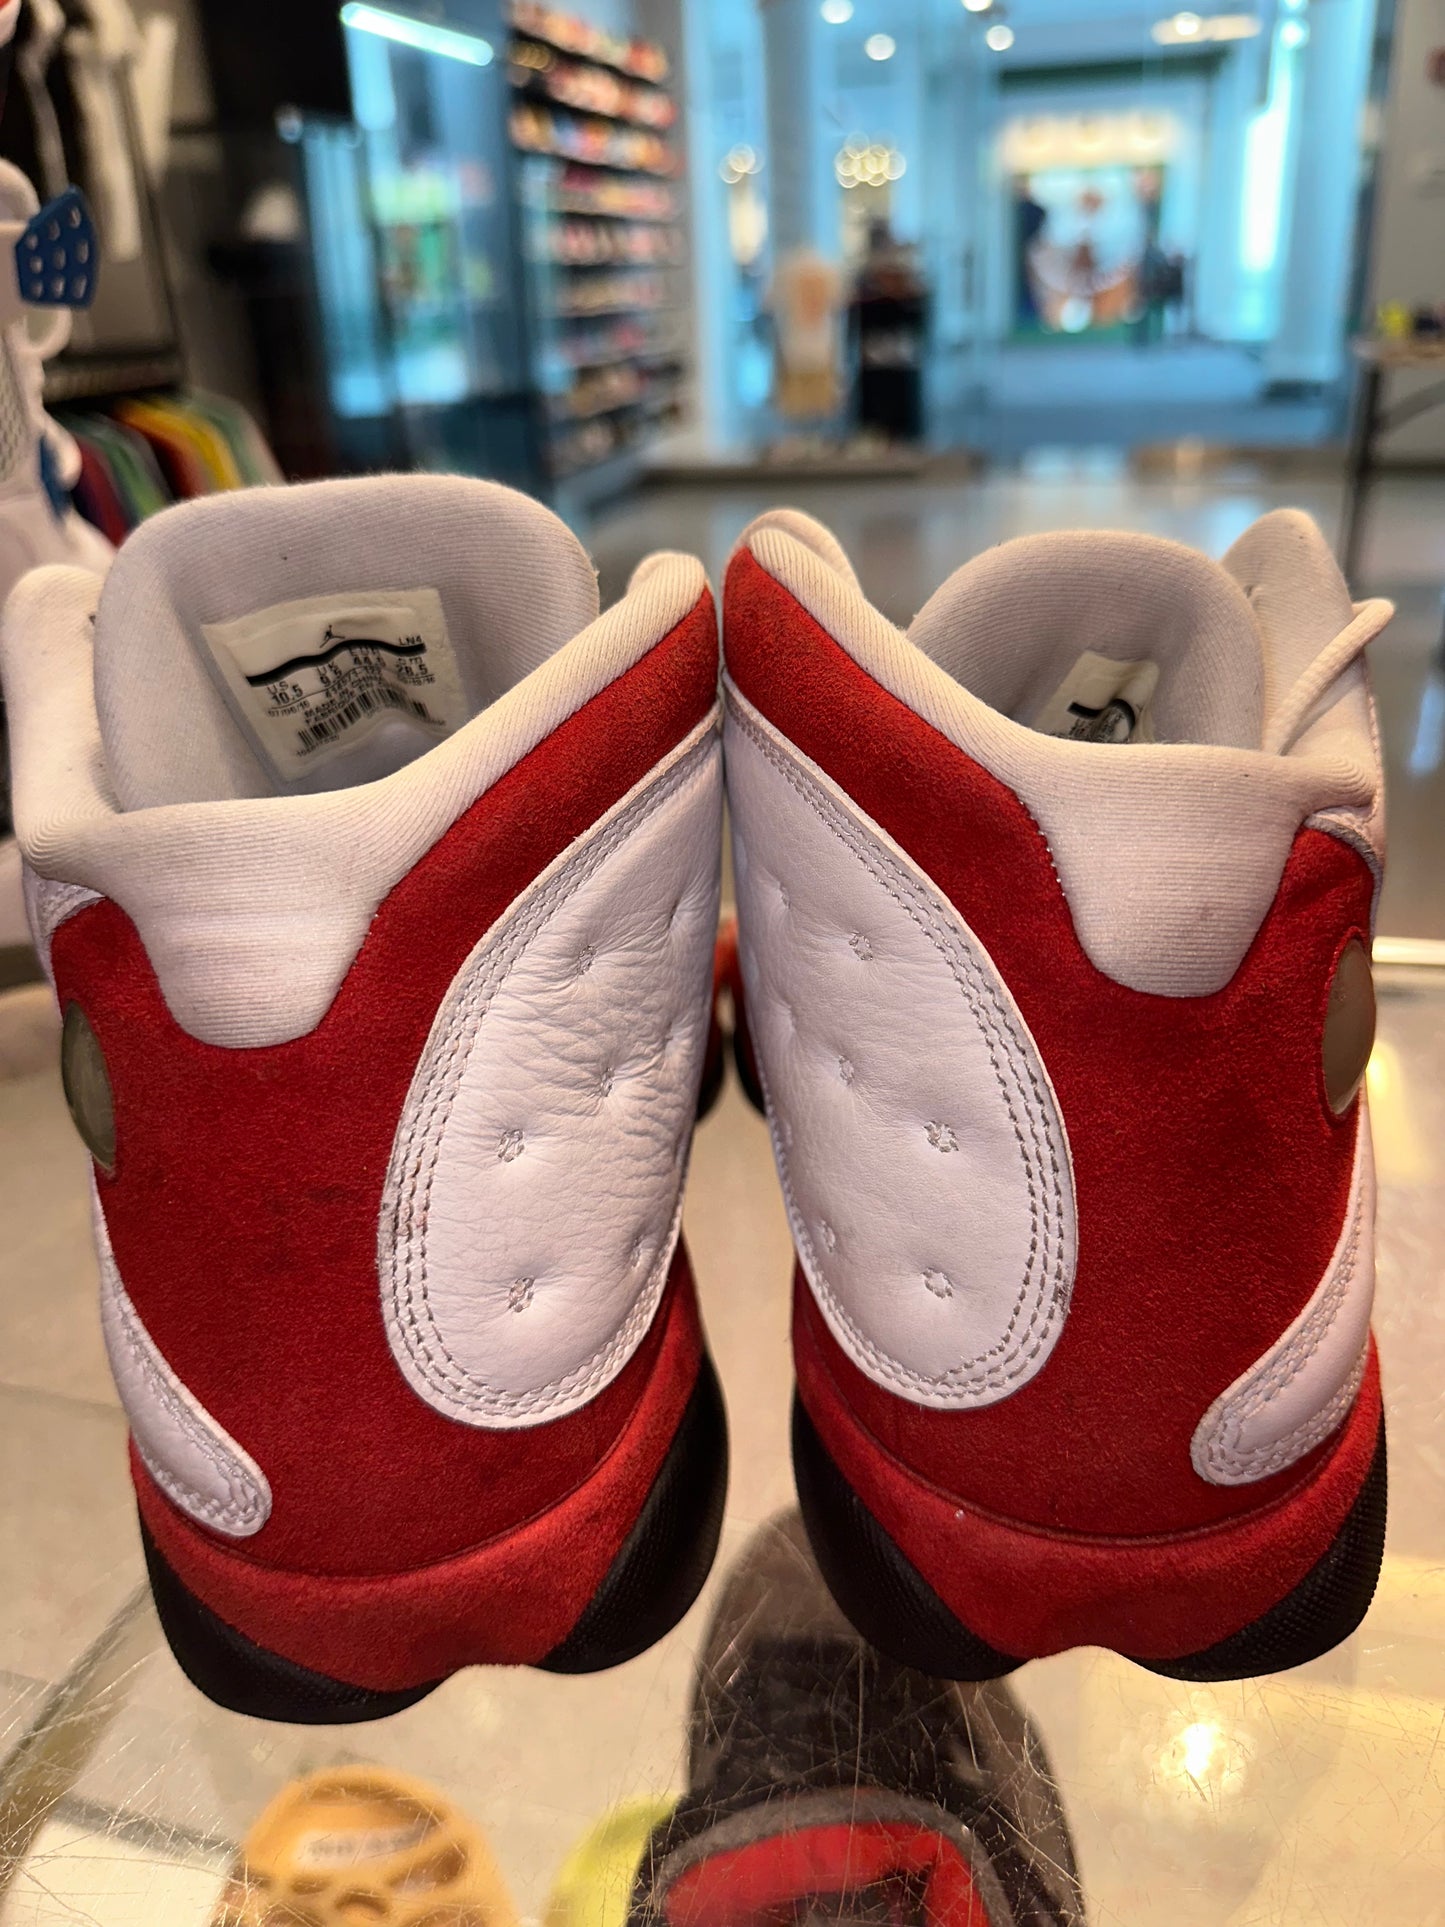 Size 10.5 Air Jordan 13 “Cherry” (Mall)